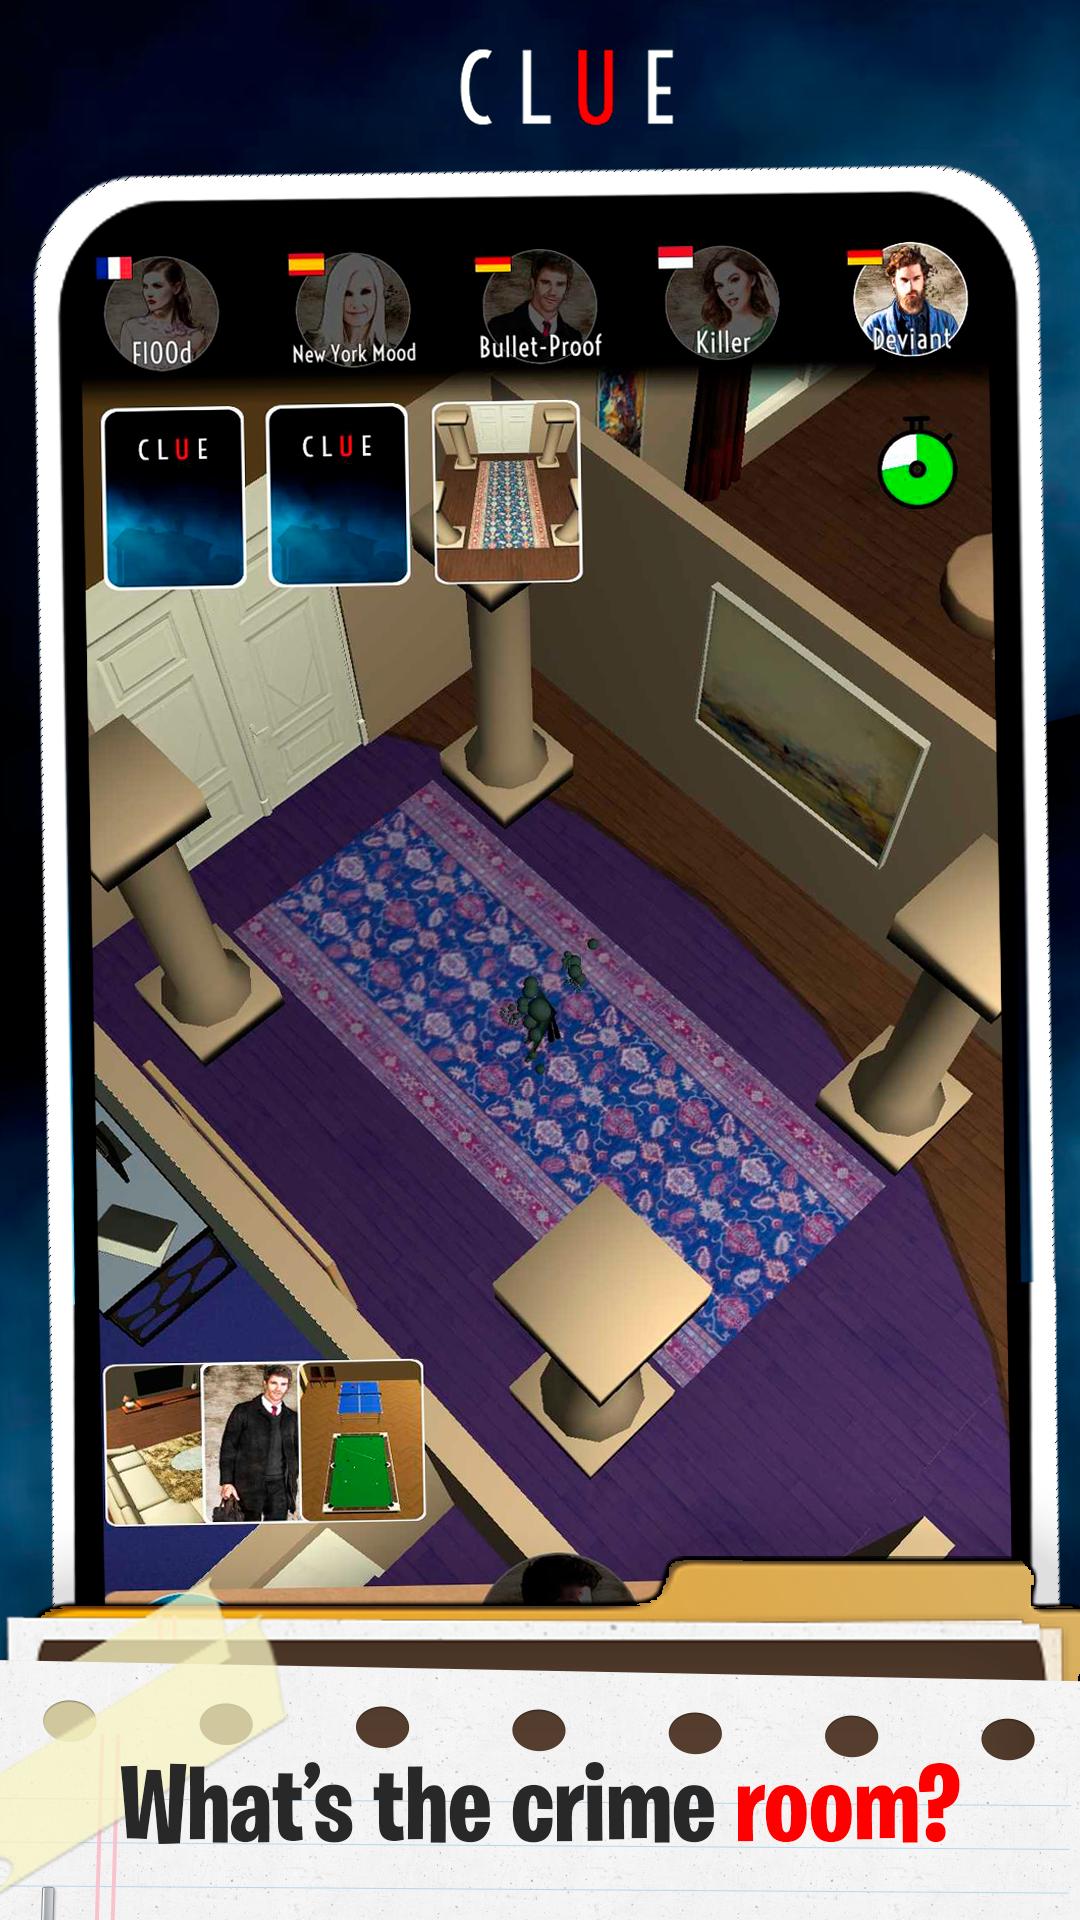 Clue Detective mystery murder criminal board game 2.3 Screenshot 3